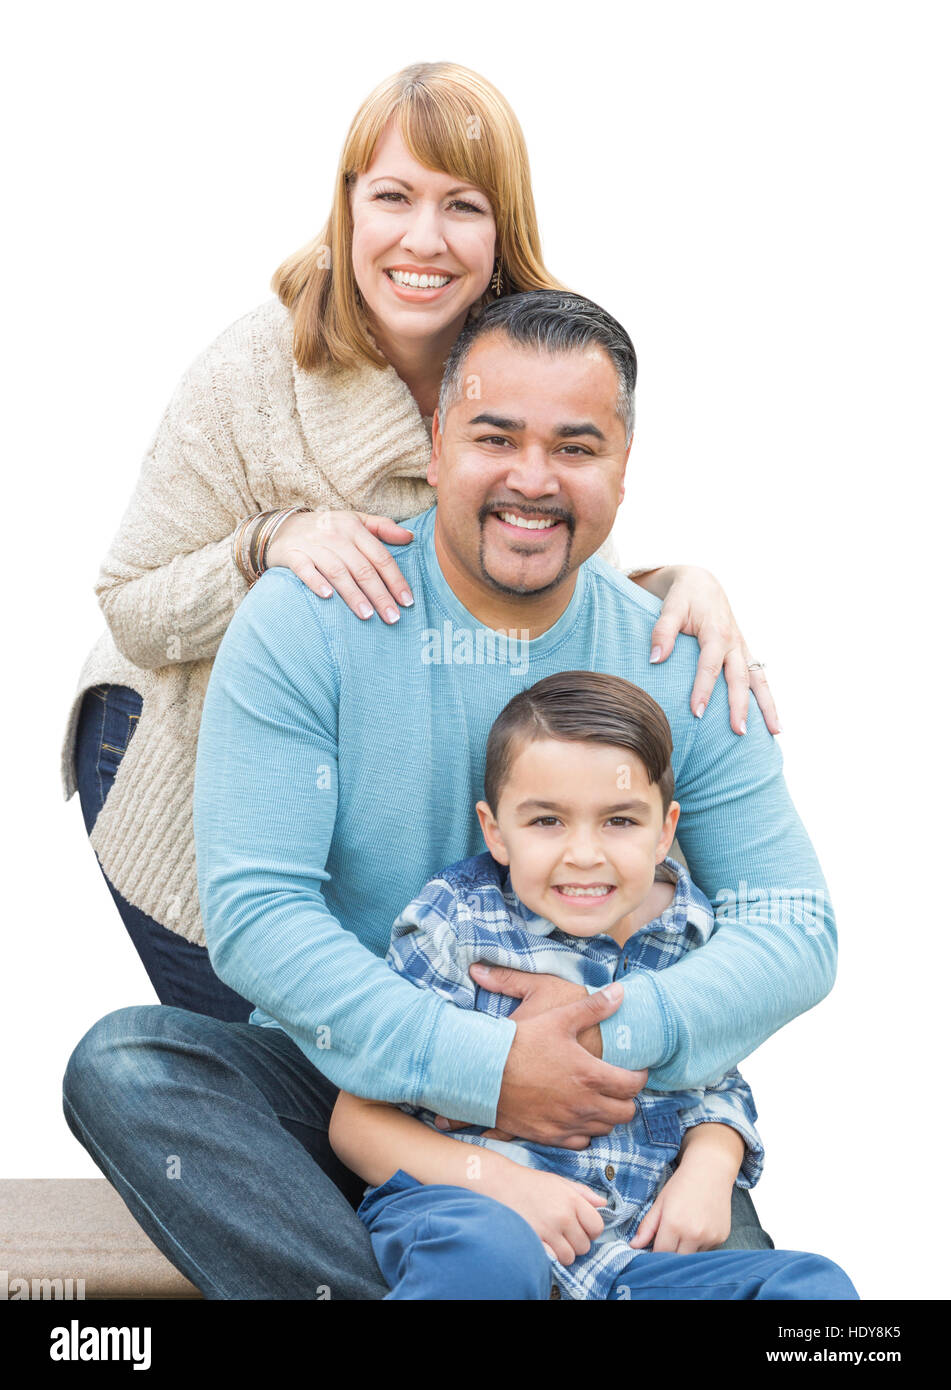 Mixed Race Hispanic Caucasian Family Isolated on a White Stock Photo - Alamy